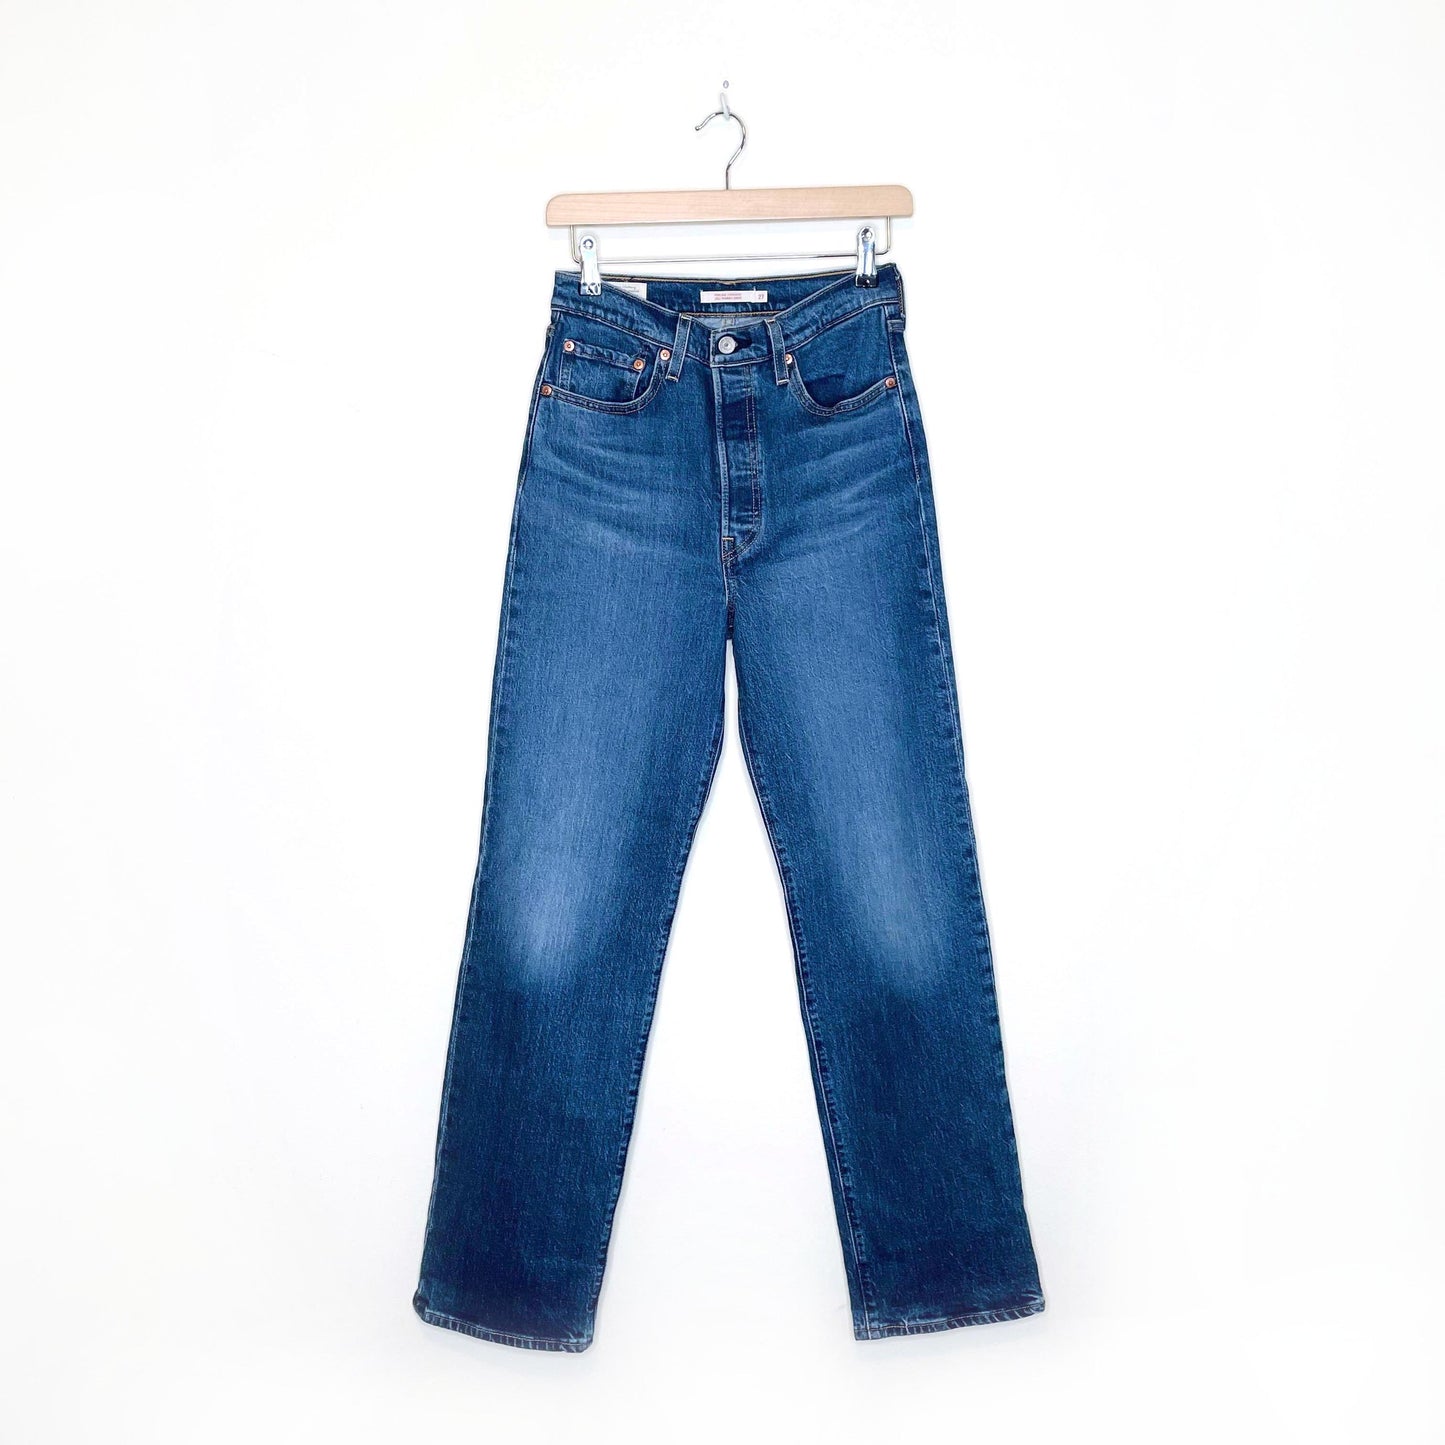 nwot levi's aritzia ribcage straight jeans - size 27